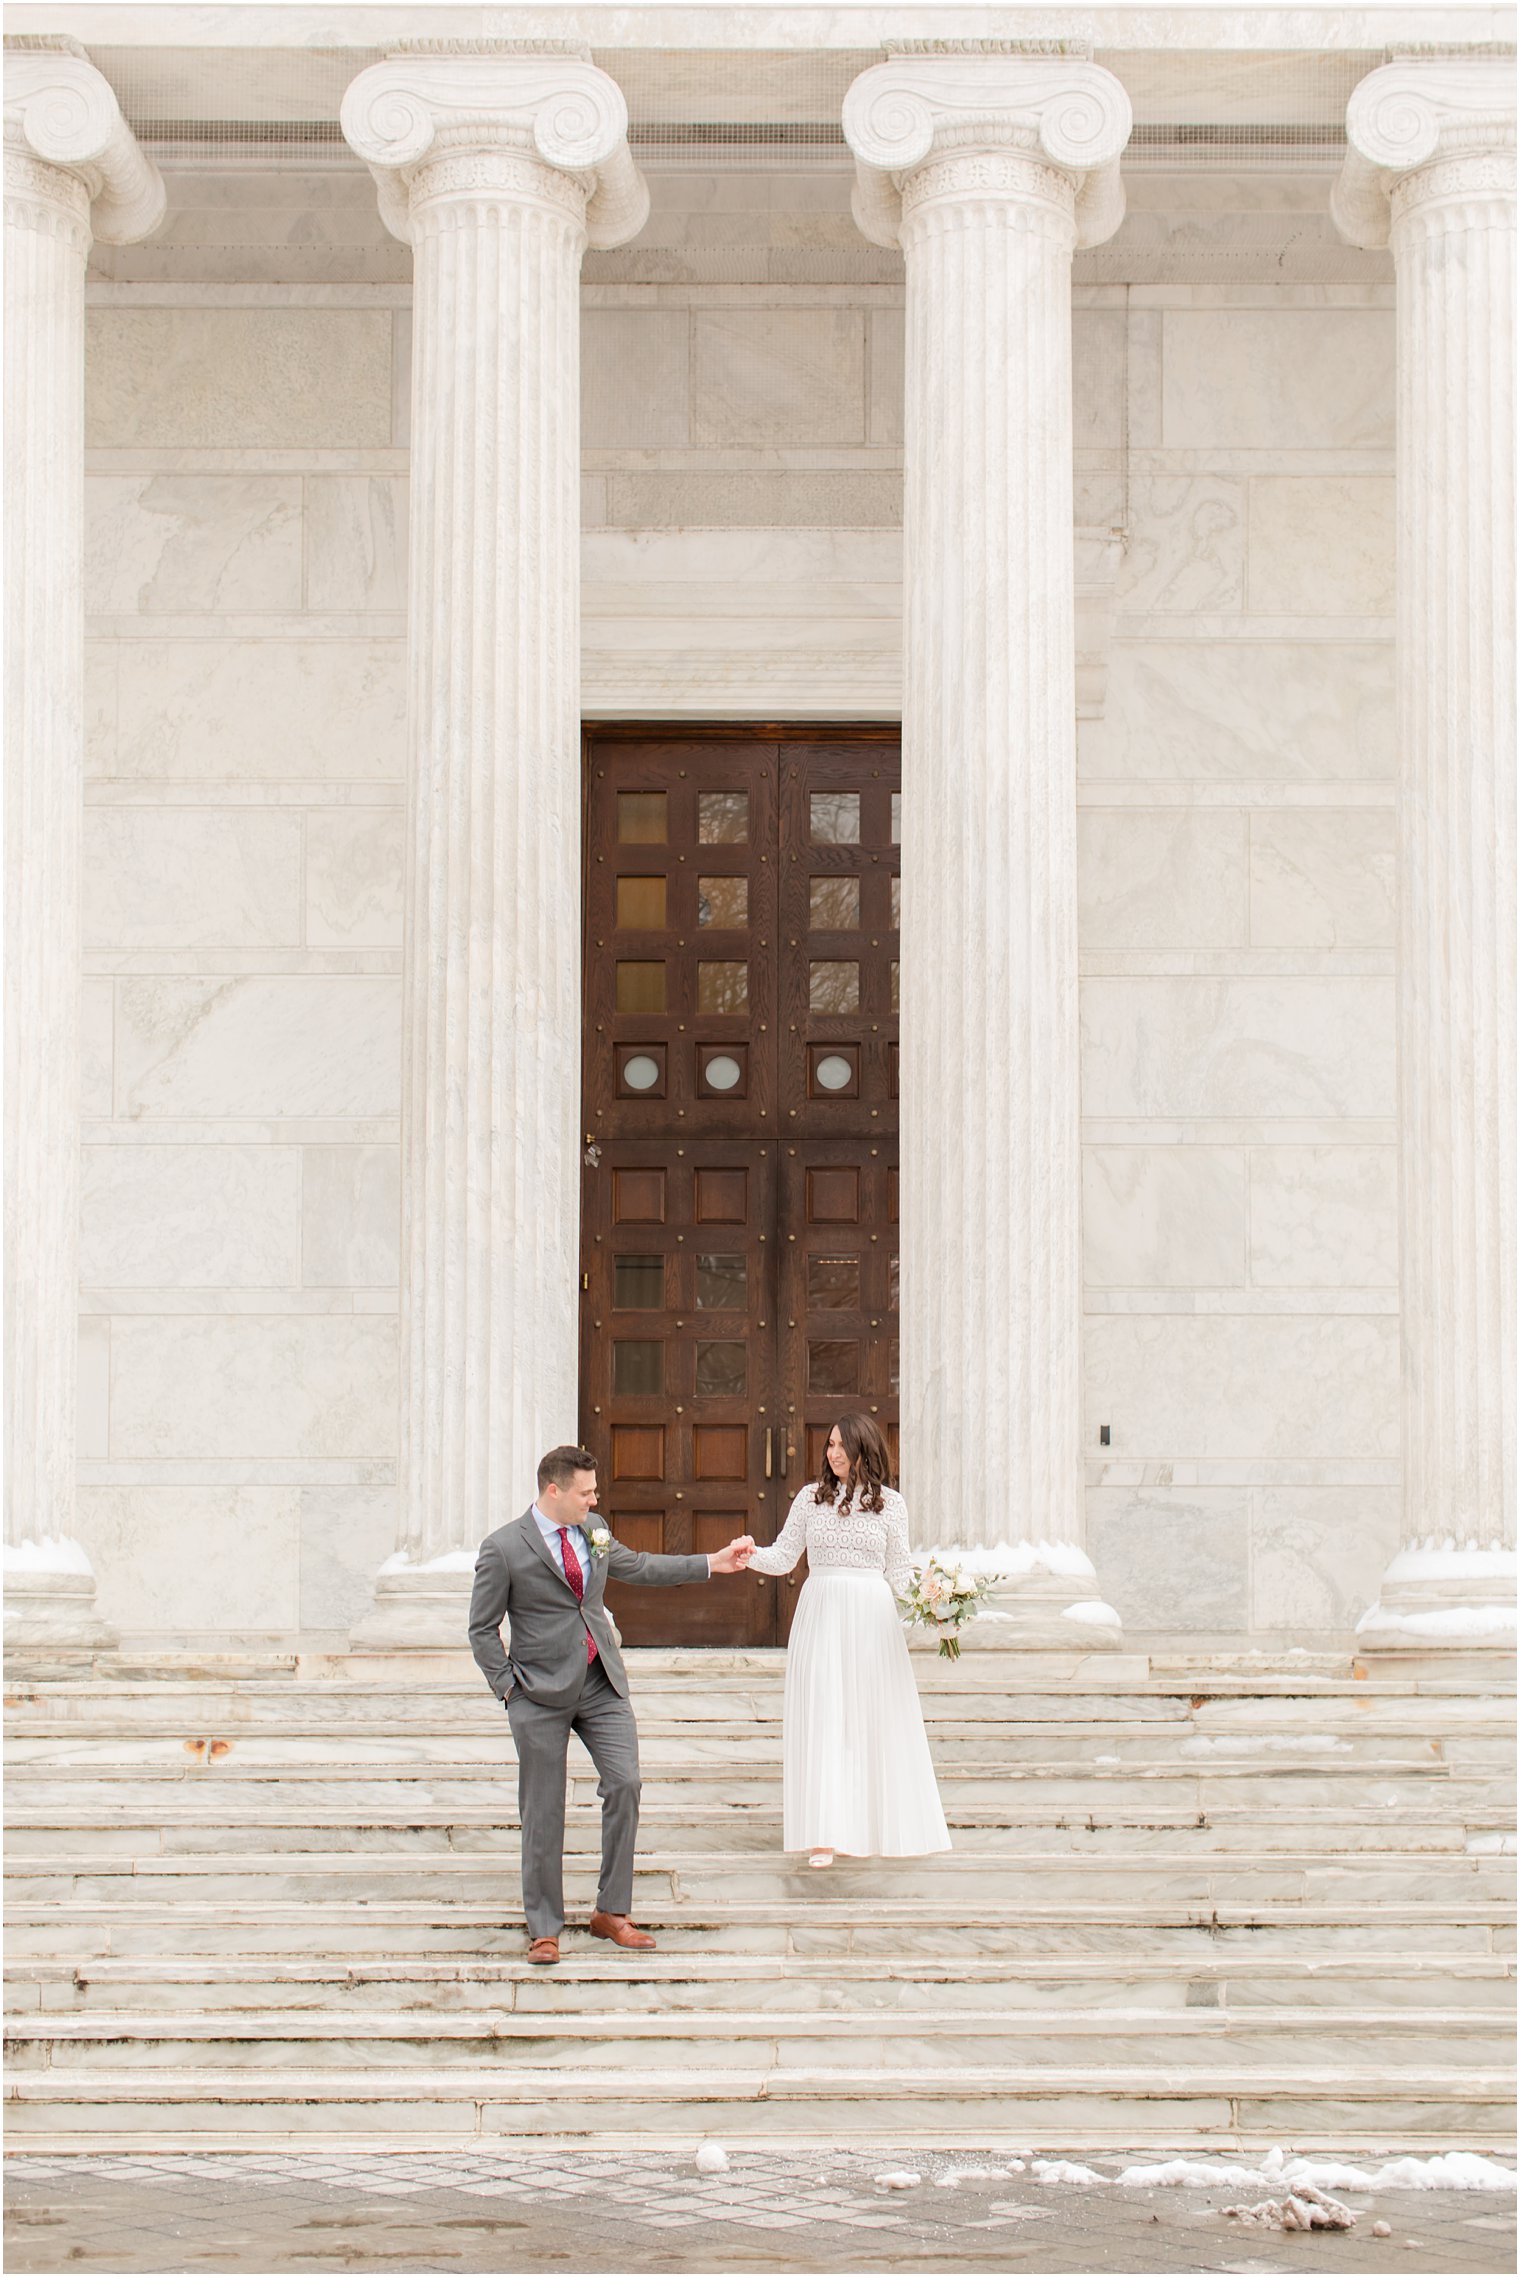 groom helps bride down steps at Princeton University building 